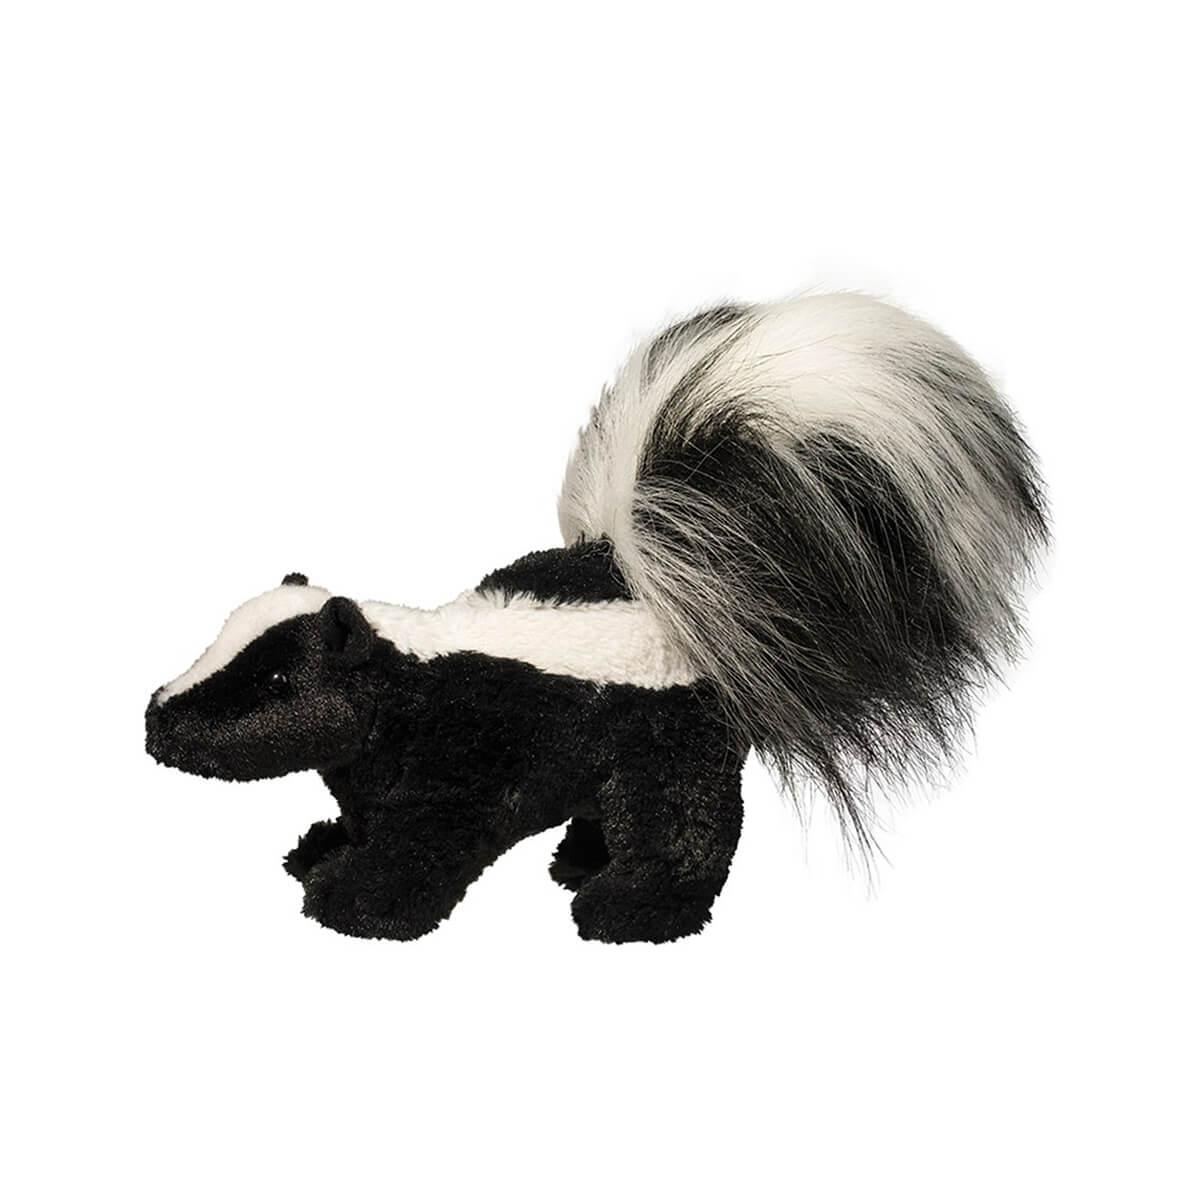 skunk plush toy